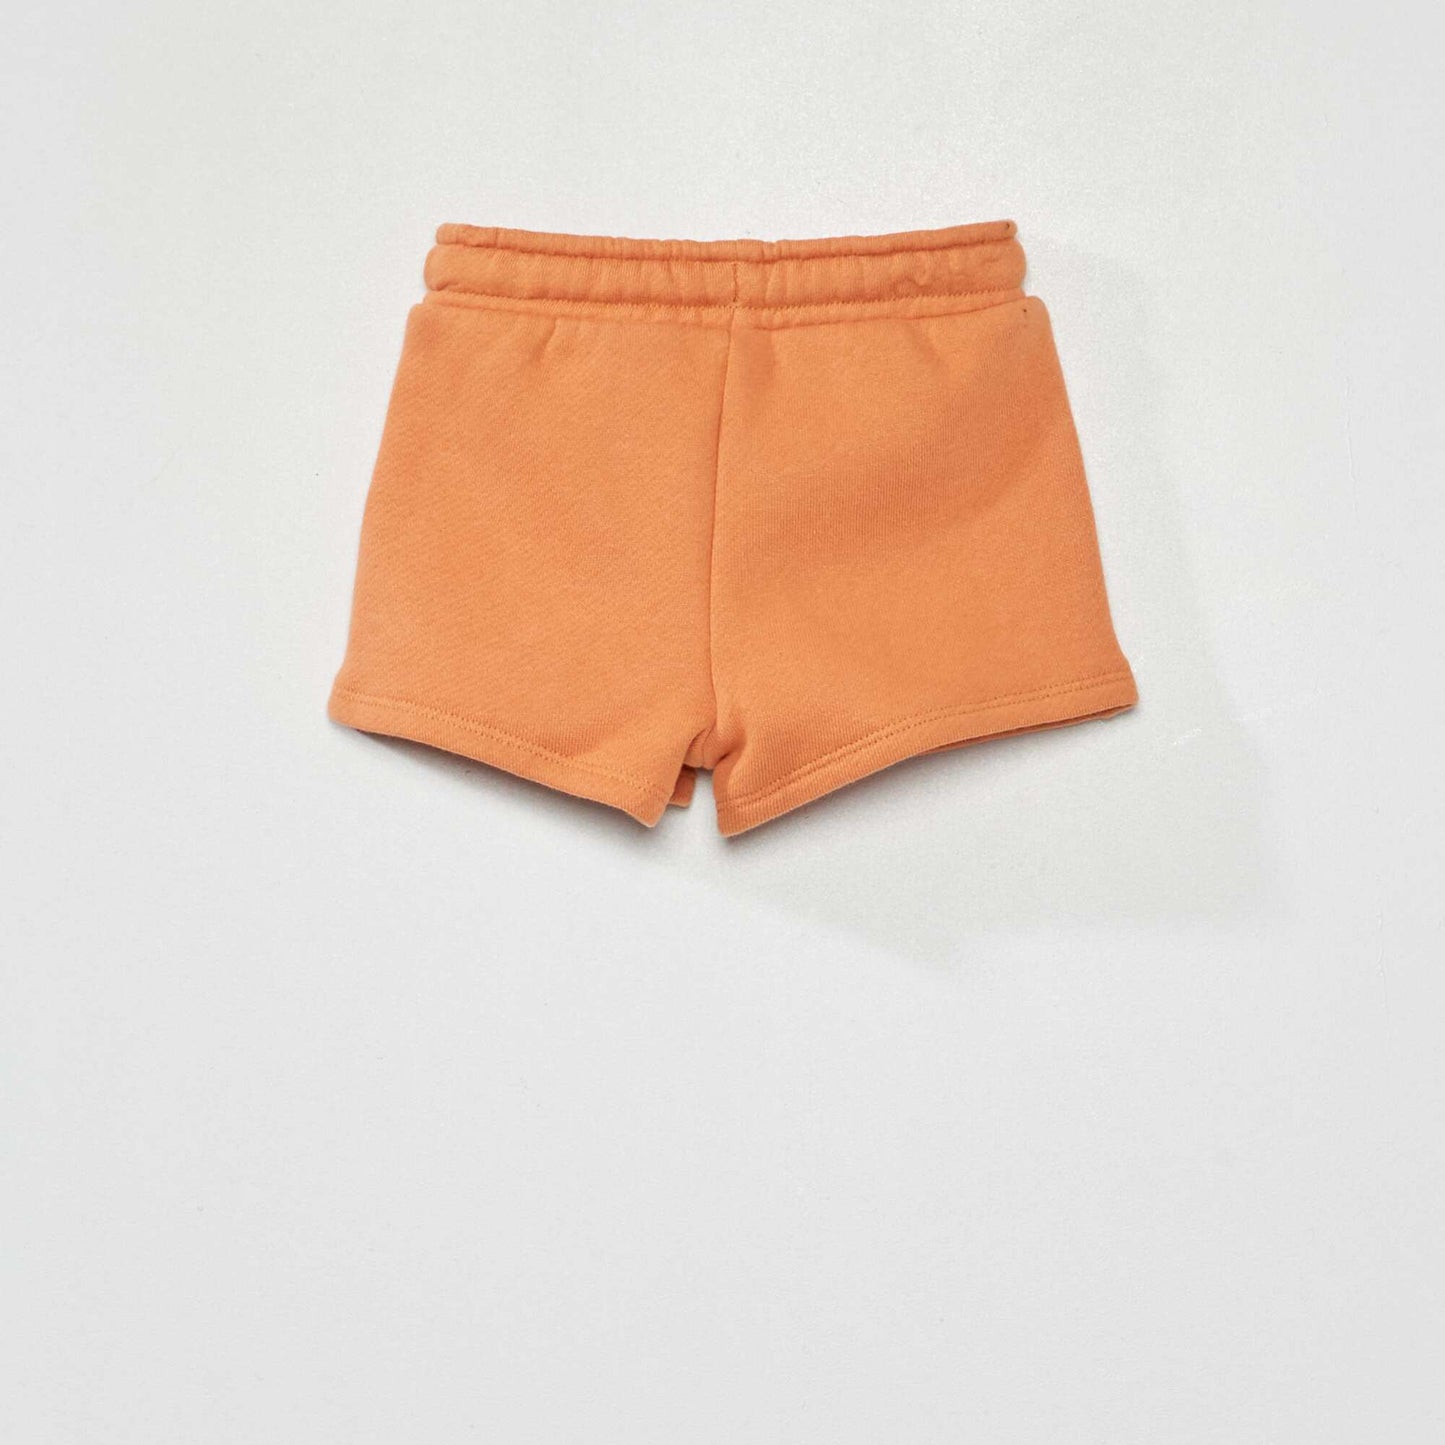 Plain sweatshirt fabric shorts rust orange